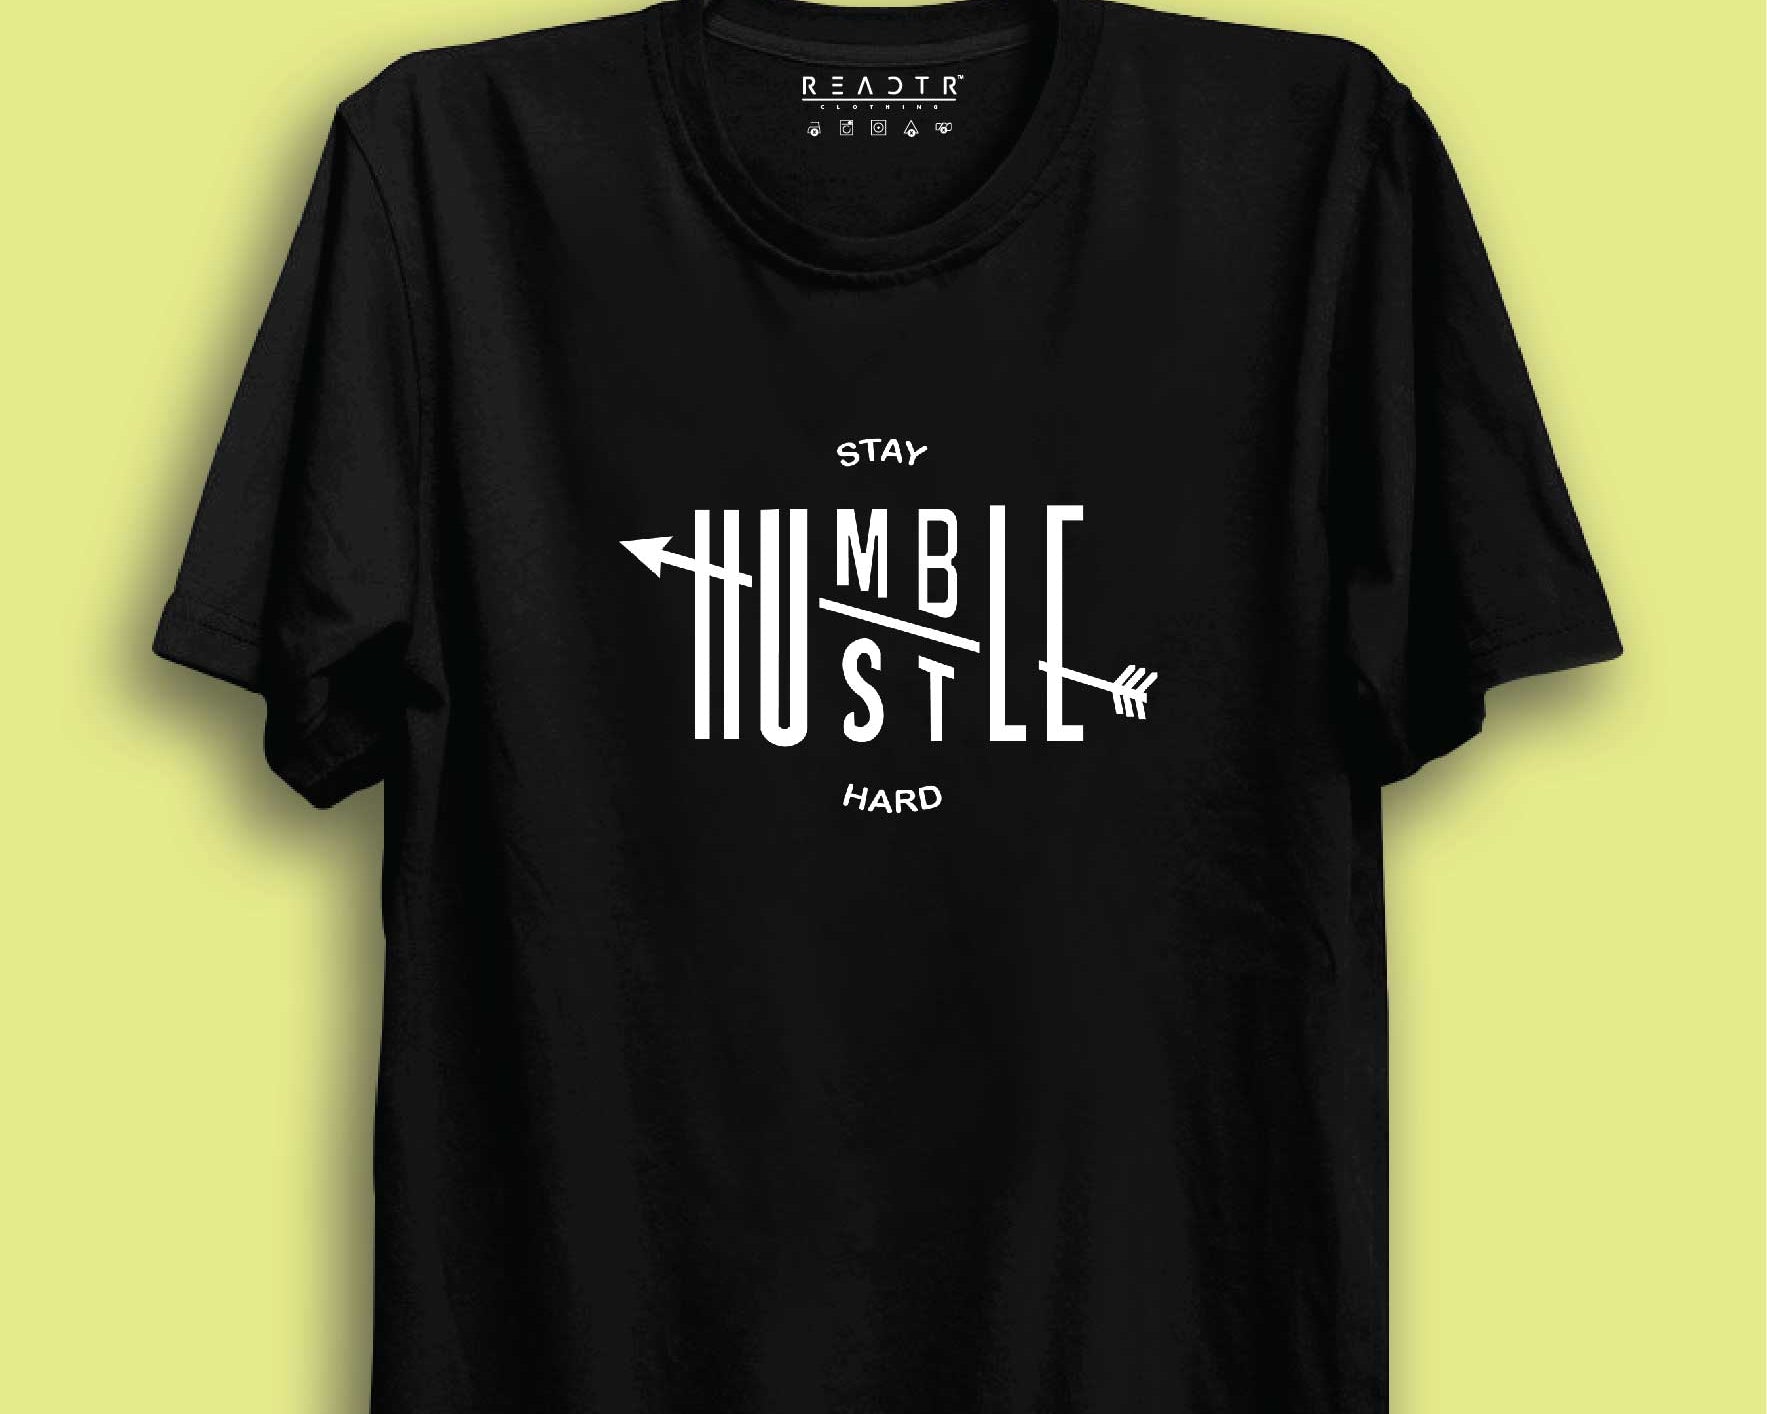 Stay Humble Hustle Hard - Humble Hustle Hoodie Sweatshirt